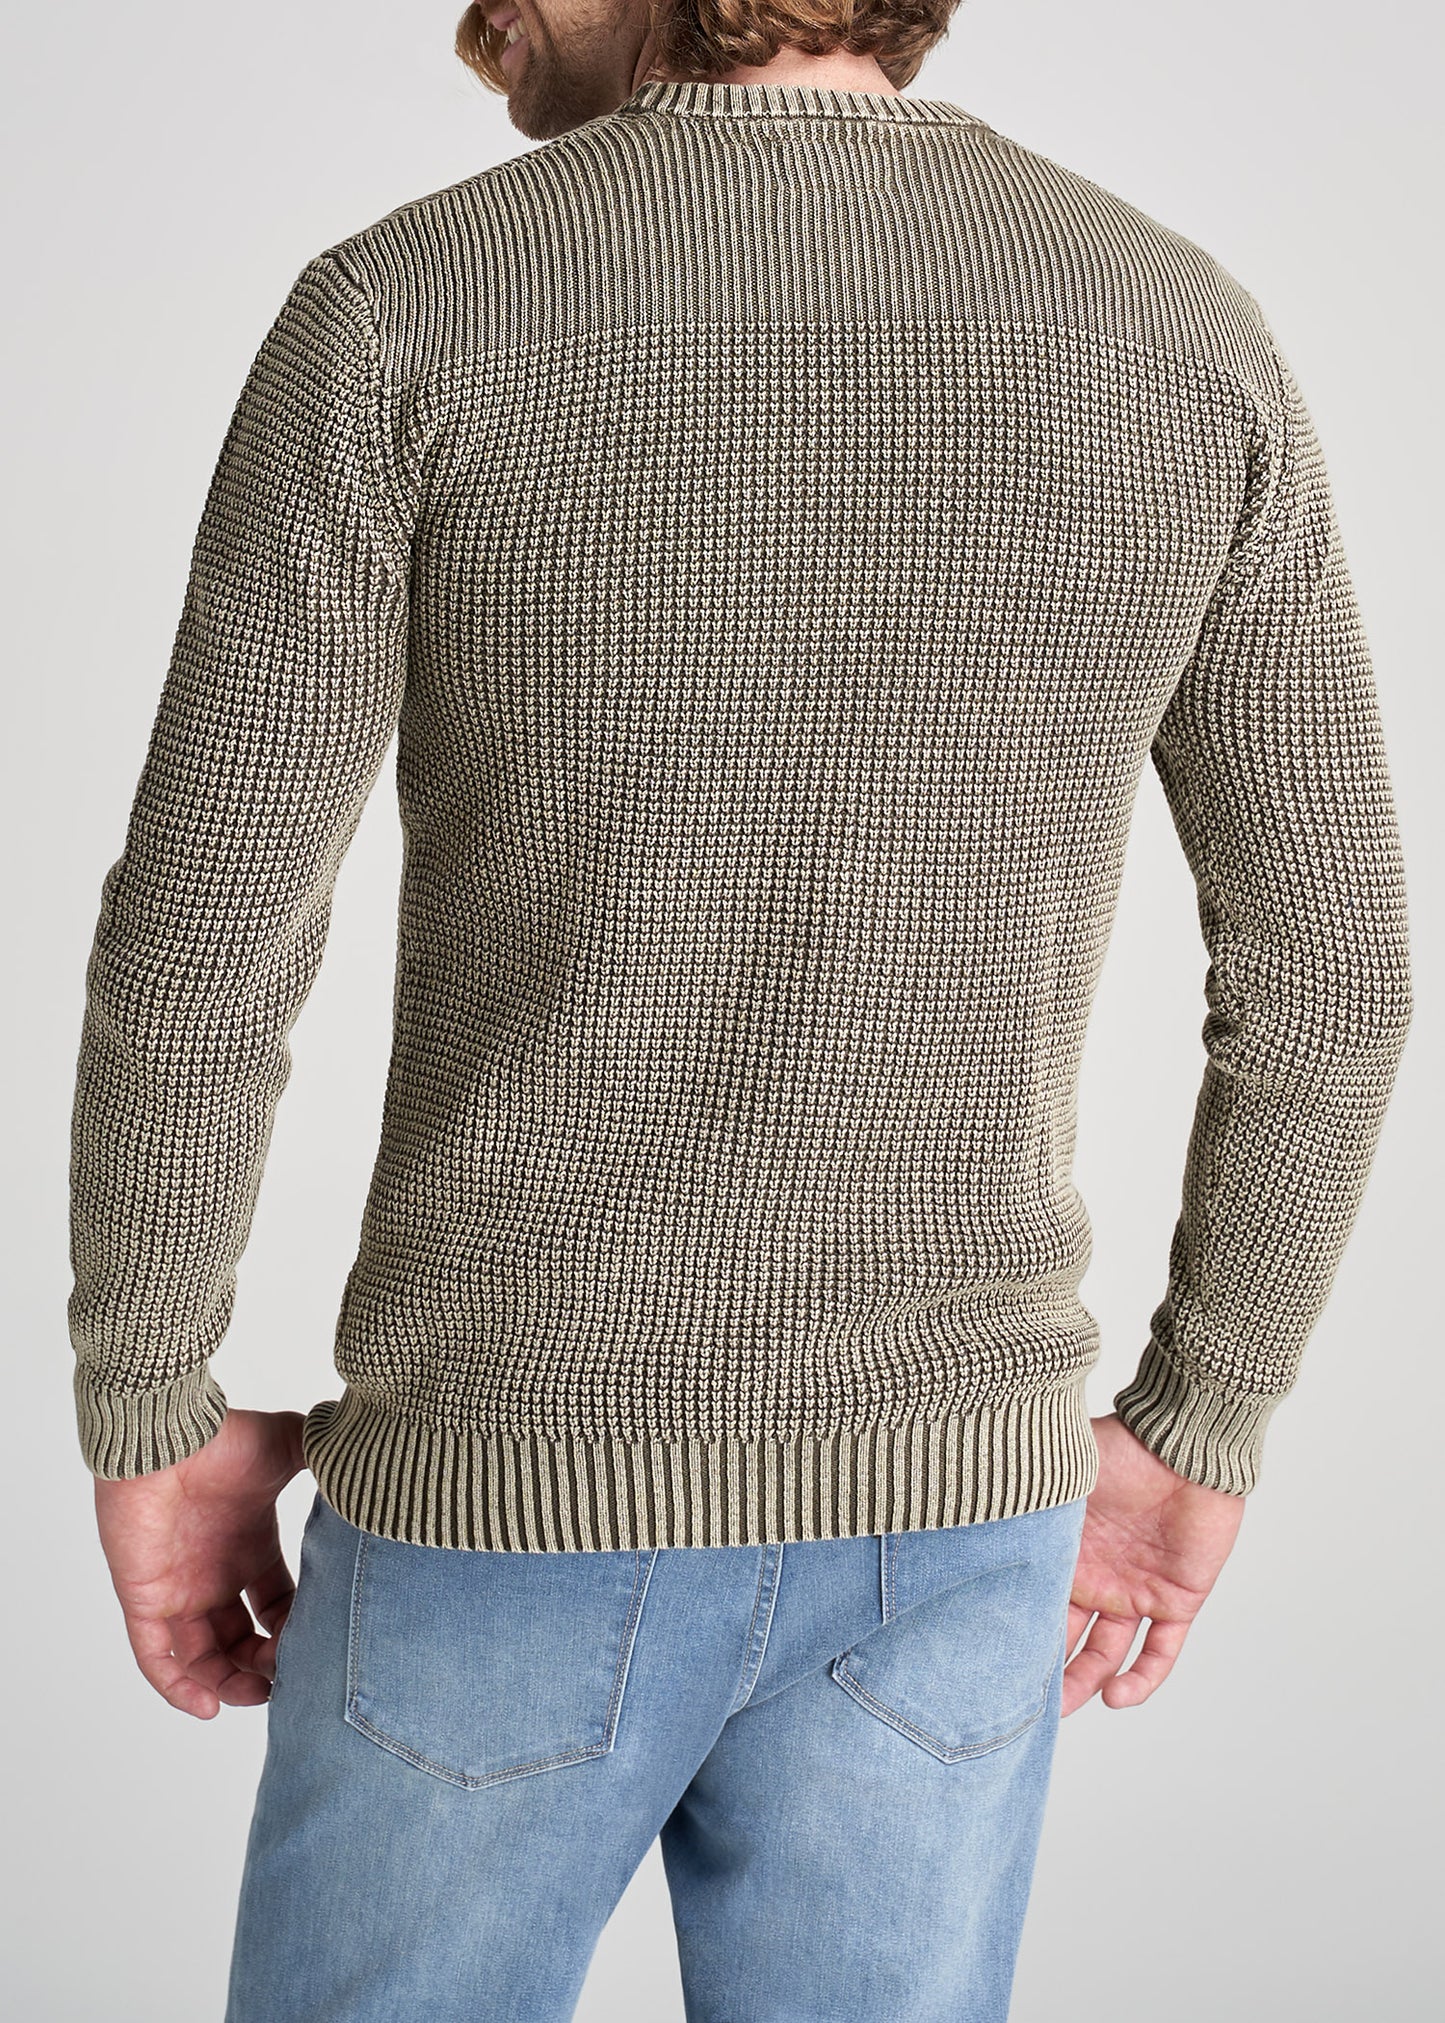 American-Tall-Men-LJ-AcidWash-Sweater-VintageSurplusGreen-back